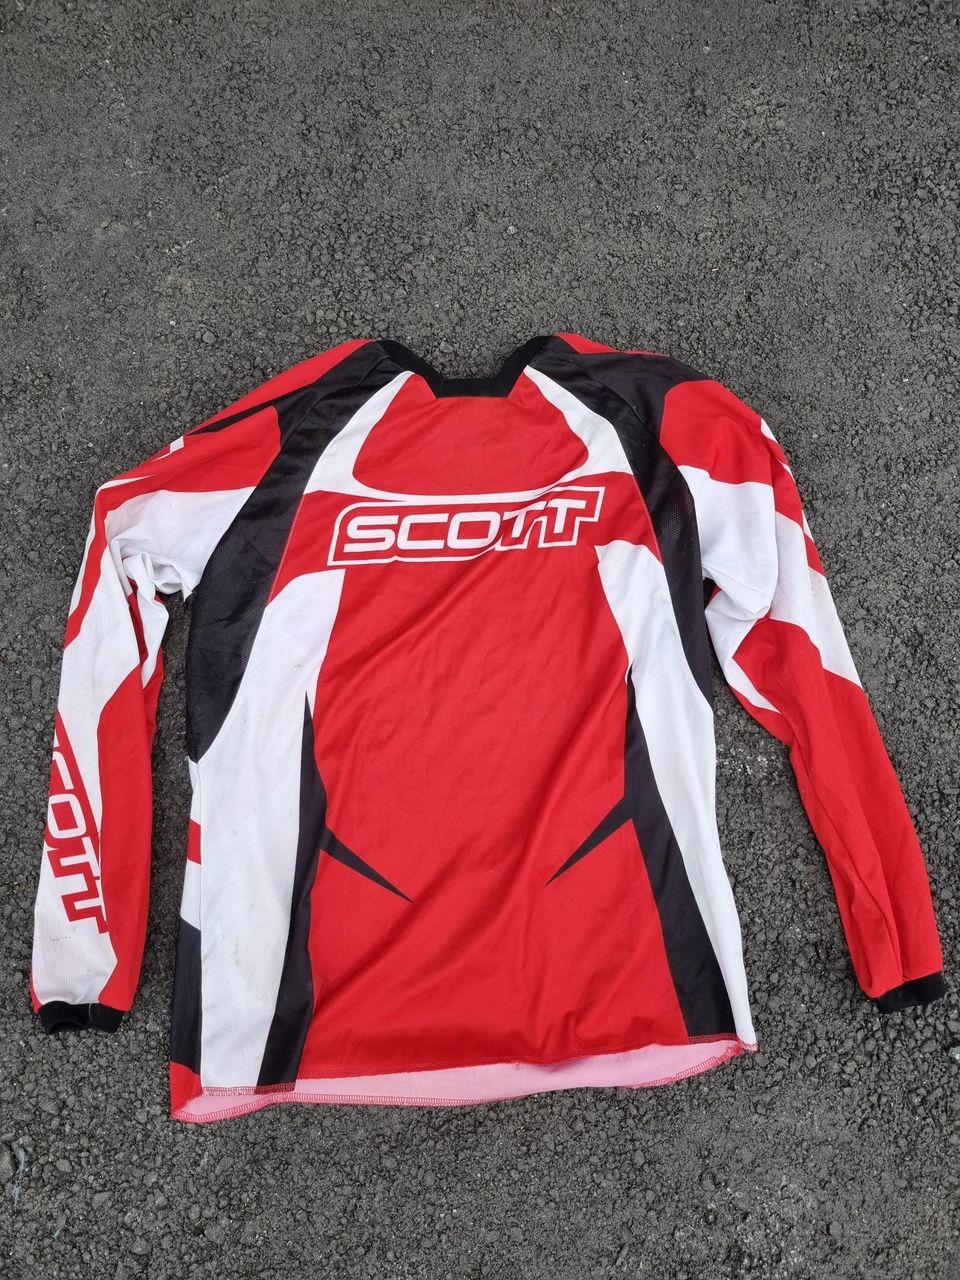 Scott-motocrossajoasu L/XL ja NoFear-panssari